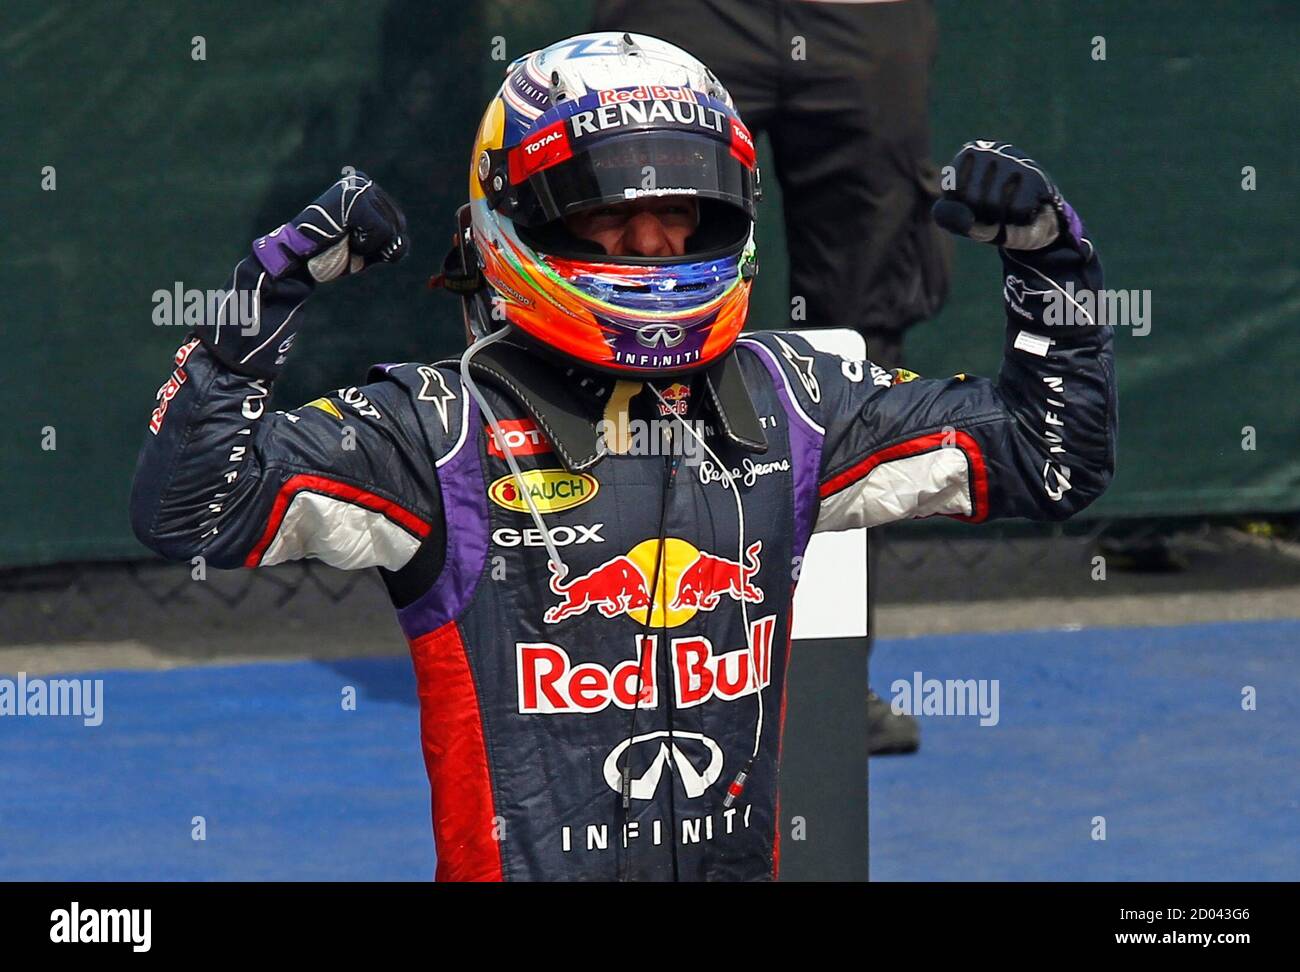 Red Bull Formula One driver Daniel Ricciardo of Australia celebrates after winning the Canadian F1 Grand Prix at the Circuit Gilles Villeneuve in Montreal June 8, 2014.   REUTERS/Chris Wattie (CANADA  - Tags: SPORT MOTORSPORT F1) Stock Photo